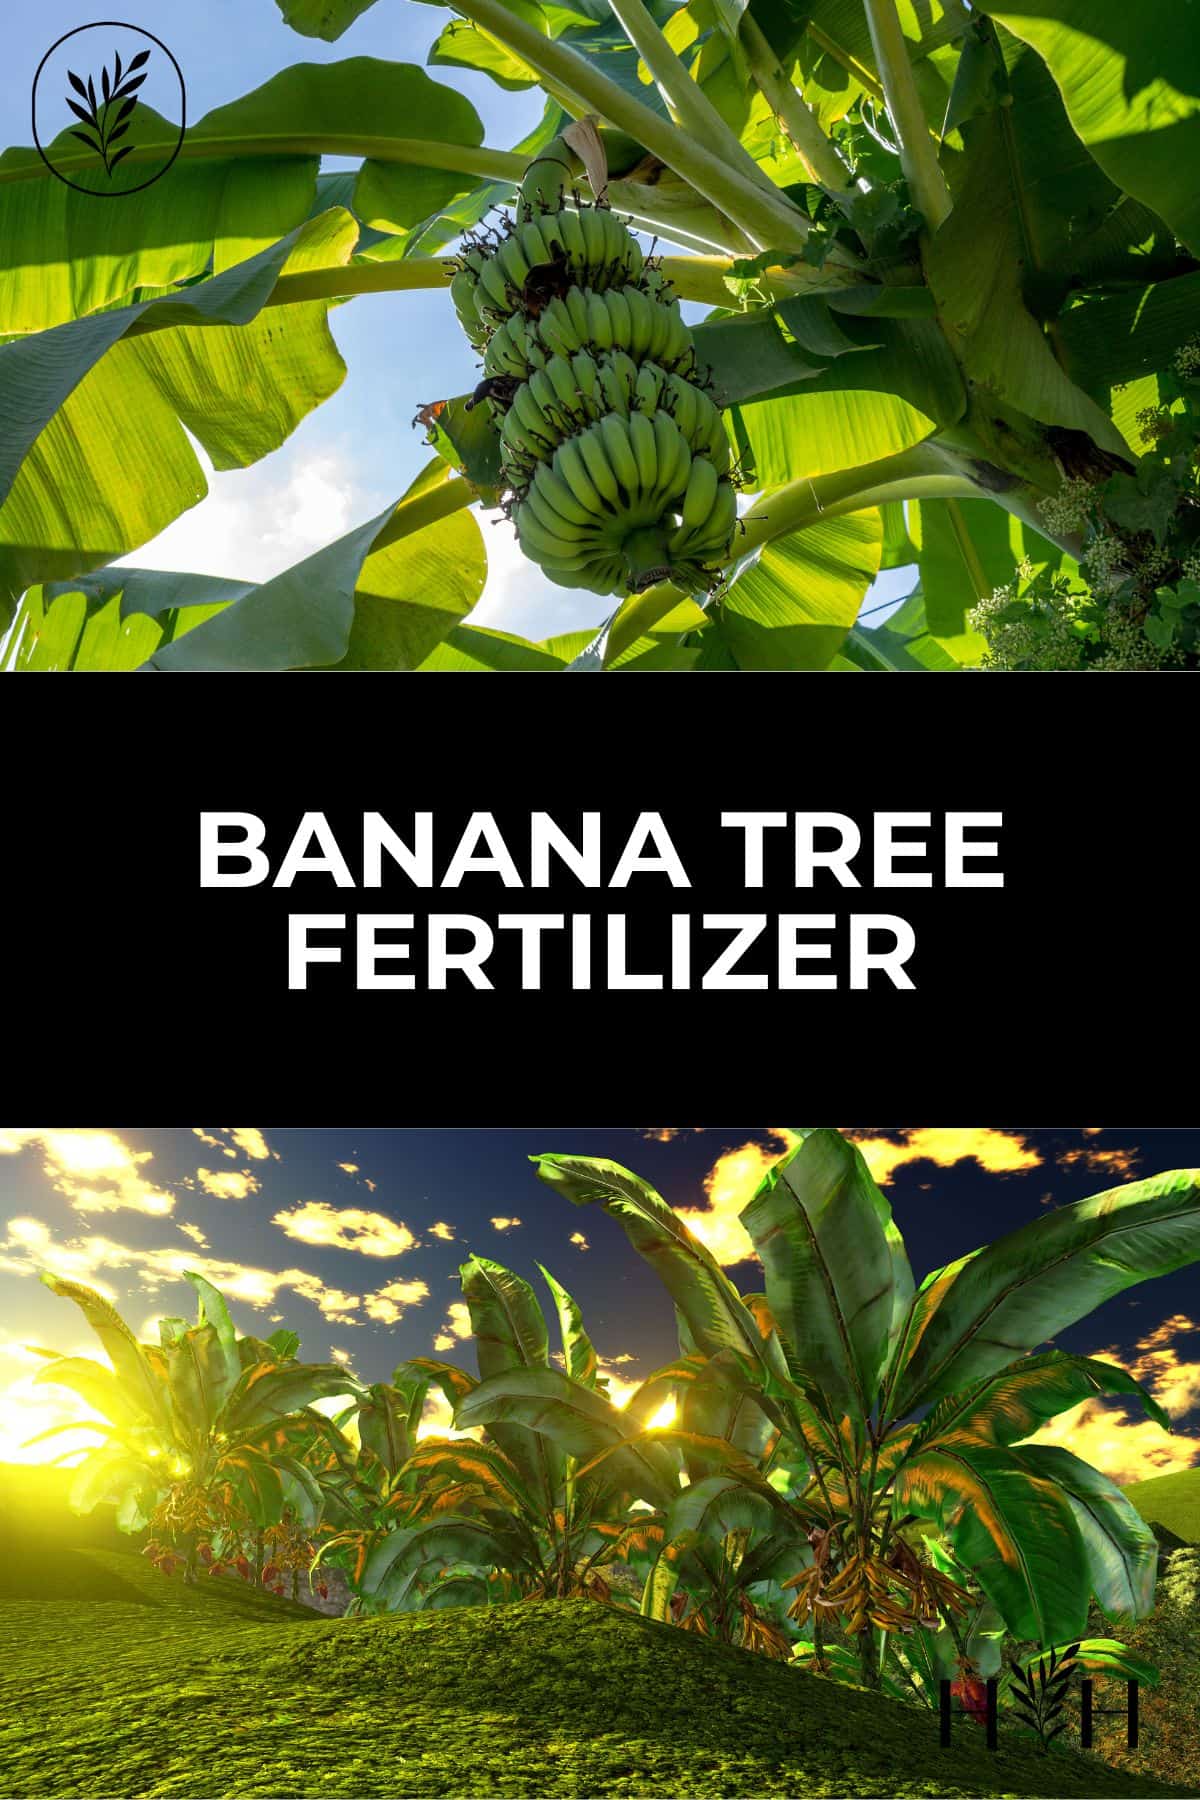 Banana tree fertilizer via @home4theharvest